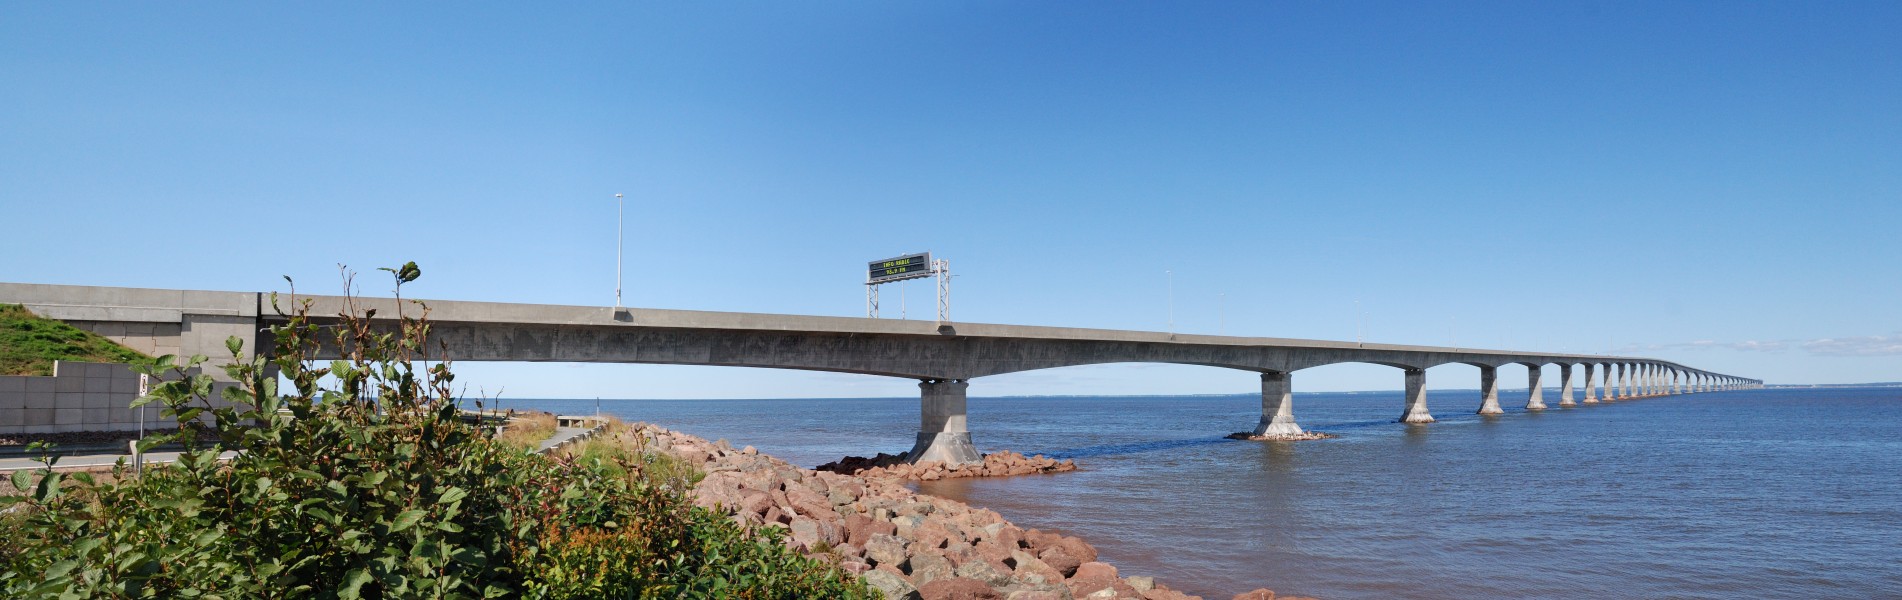 Pano Confederation Bridge